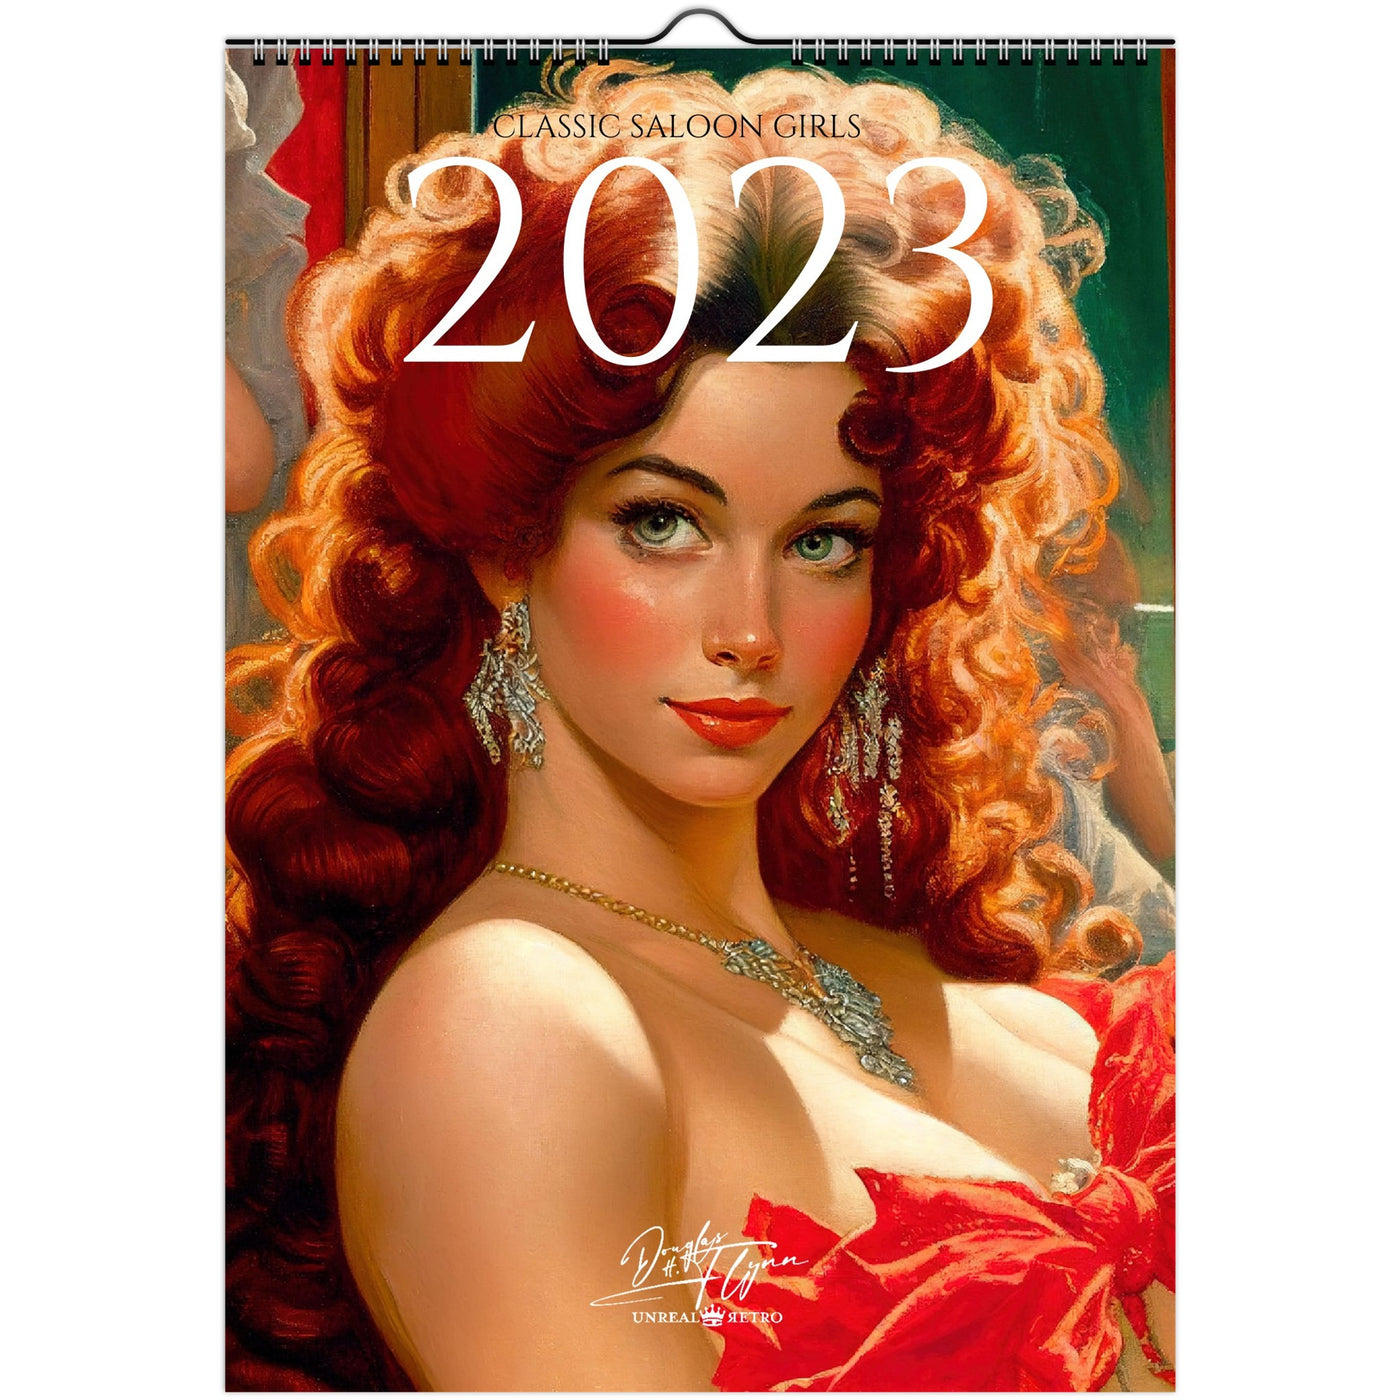 »Classic Saloon Girls 2023«, väggkalender